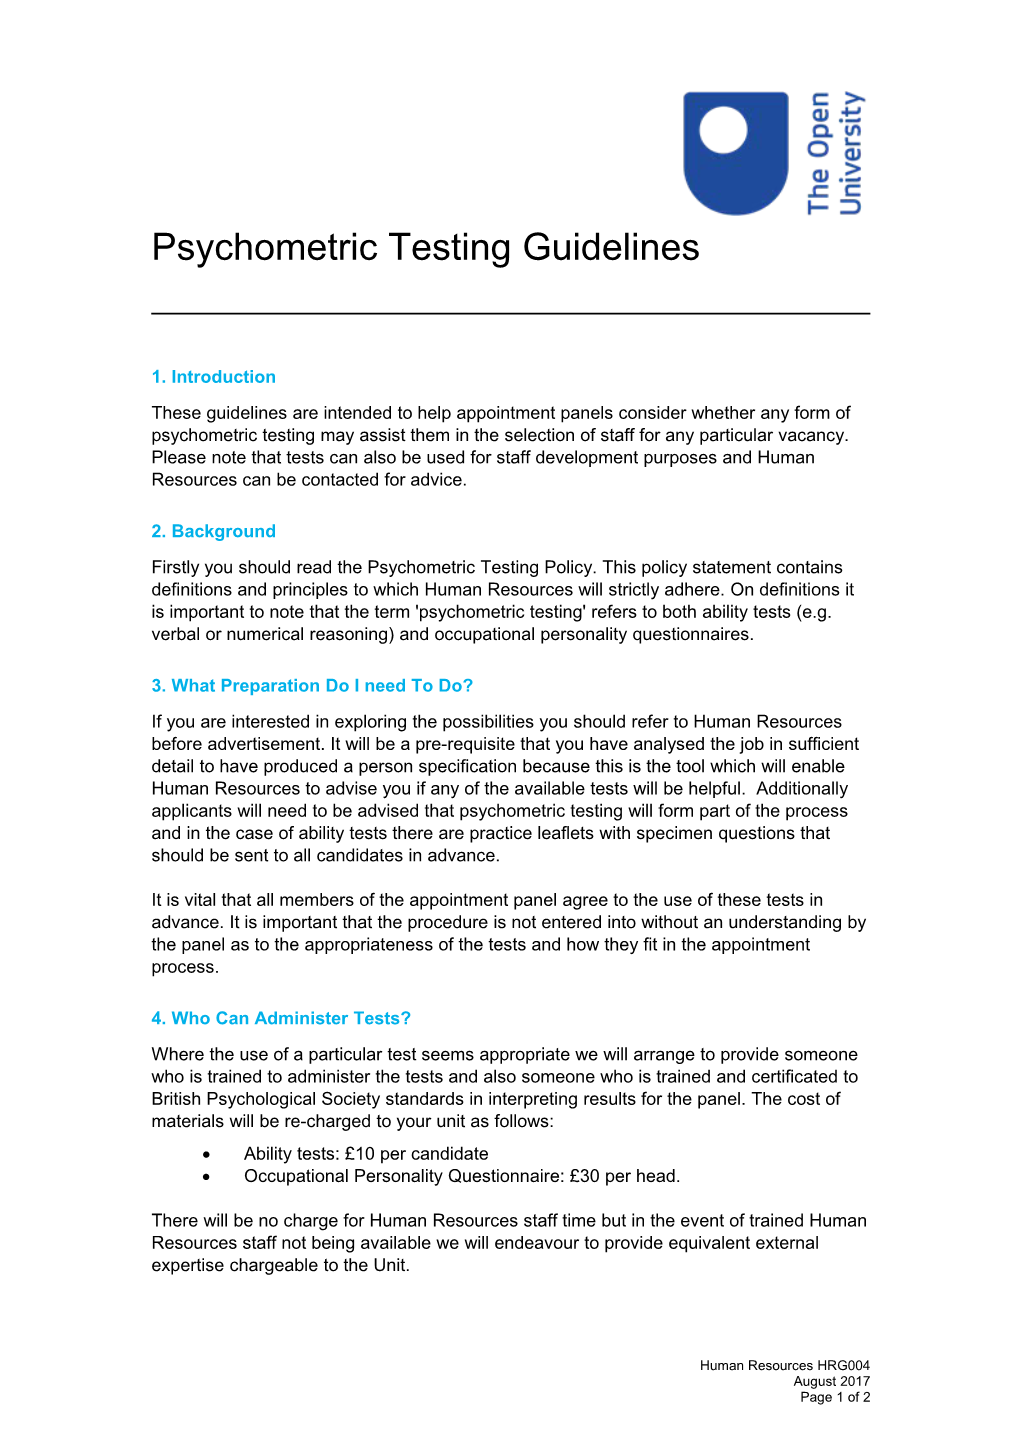 Psychometric Testing Guidelines HRG004